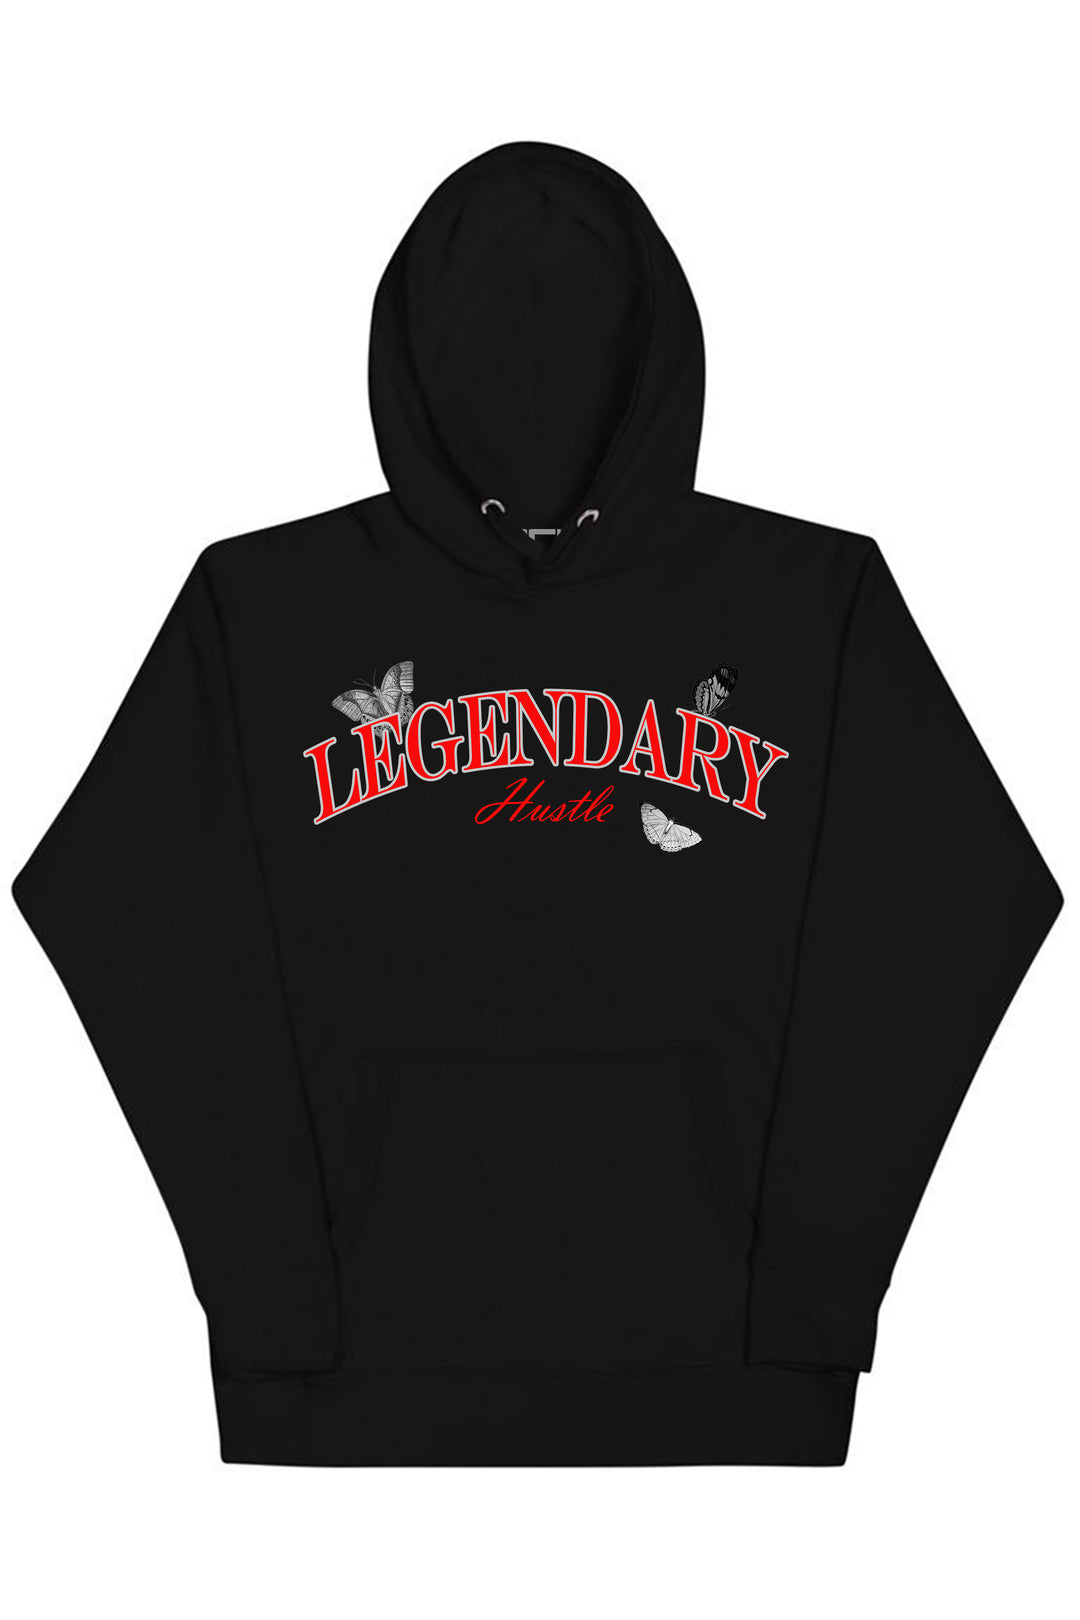 Legendary Hoodie (Red - Grey Logo) - Zamage